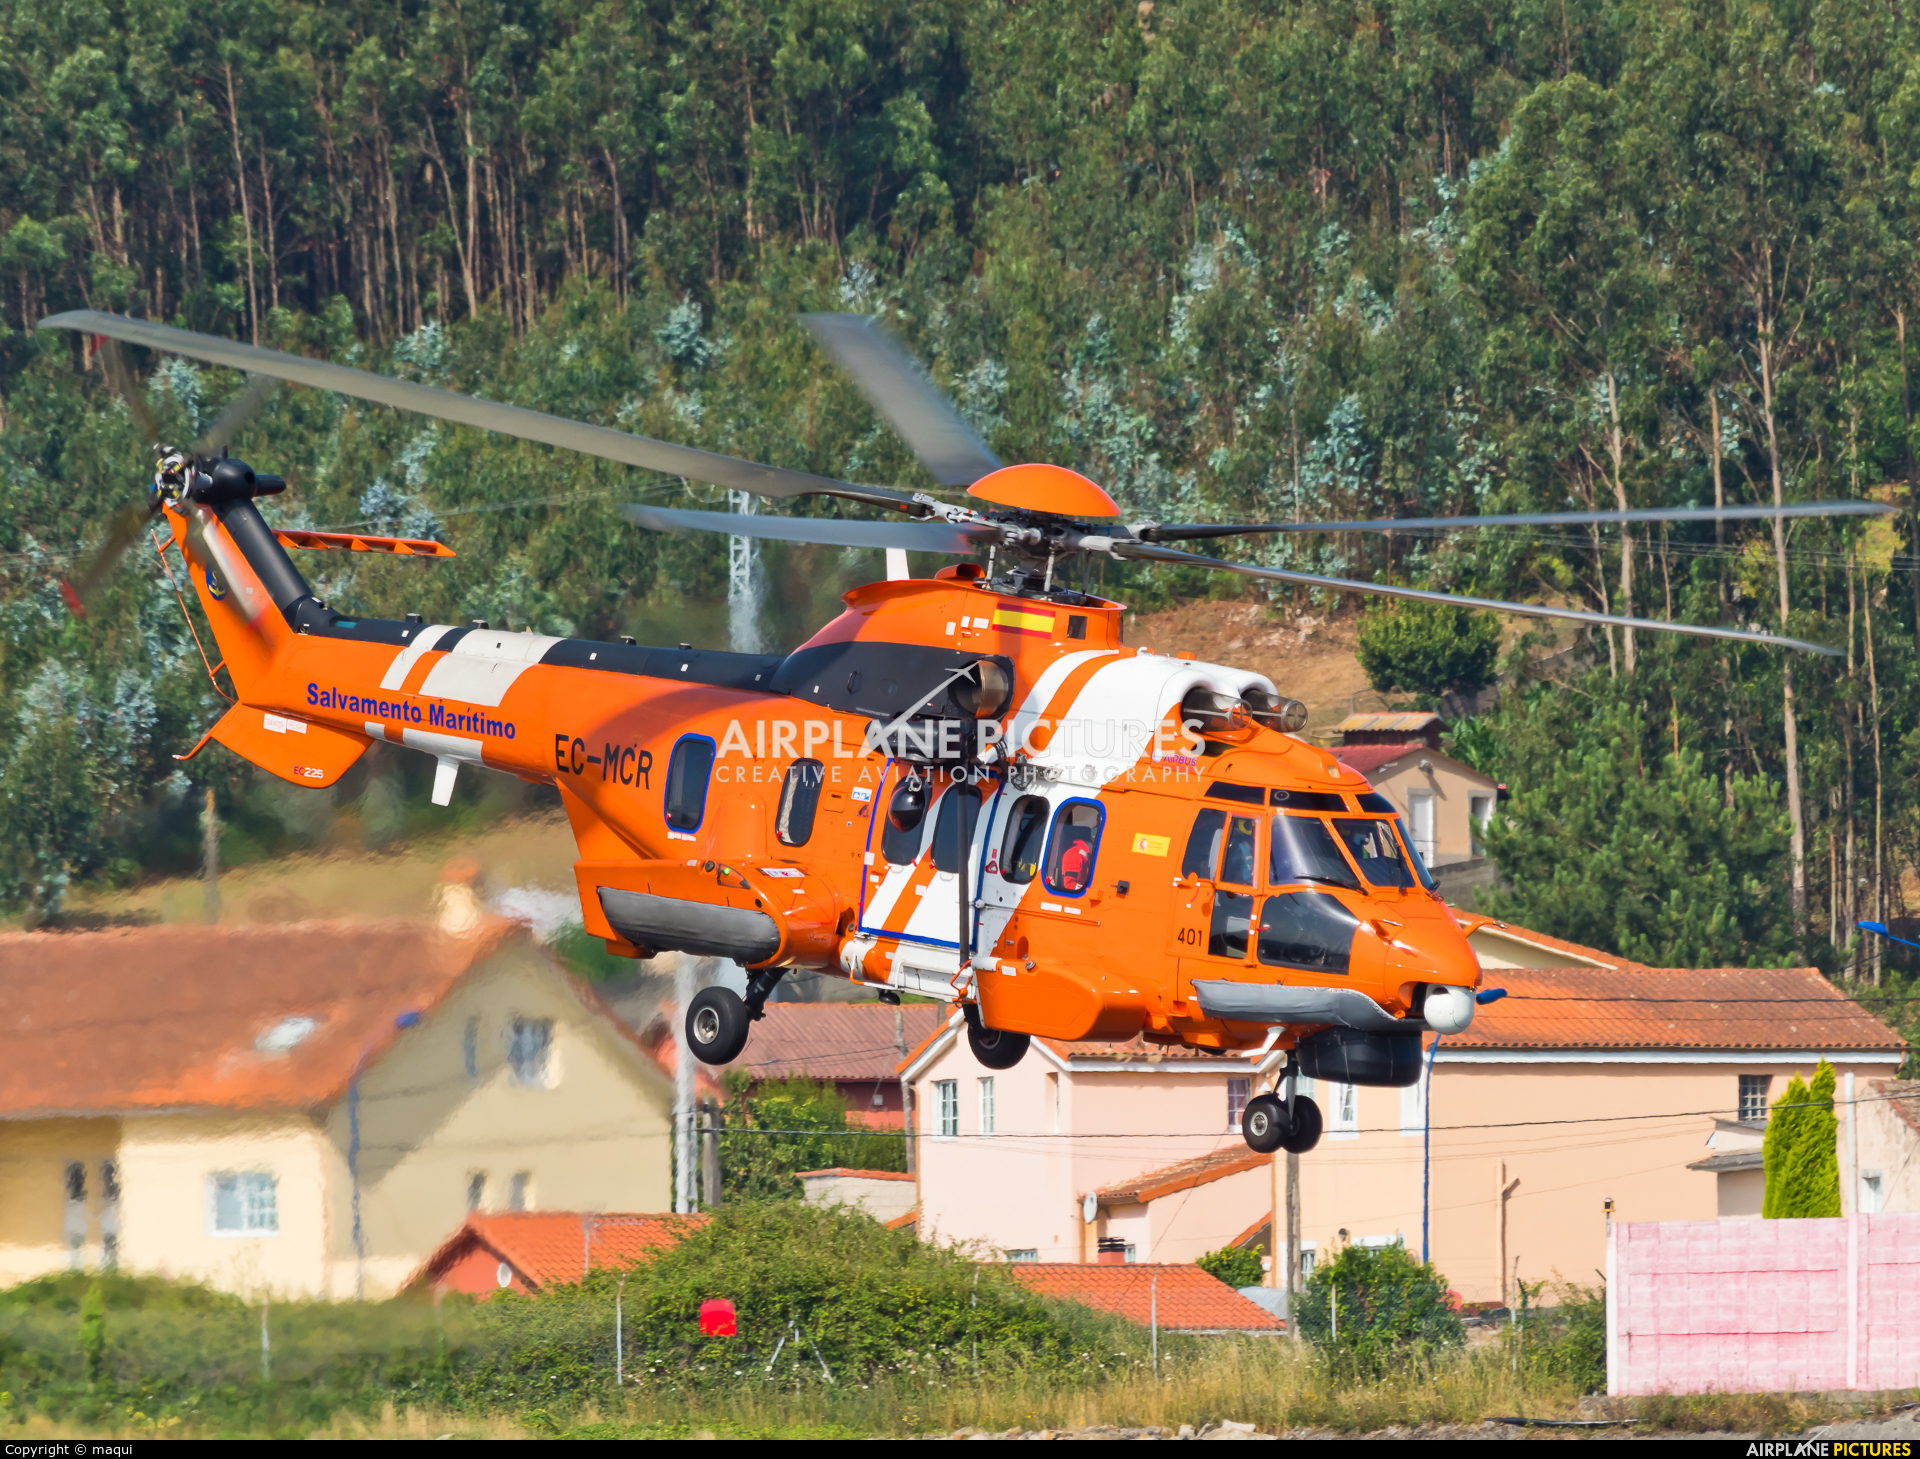 Spain - Coast Guard EC-MCR aircraft at La Coruña